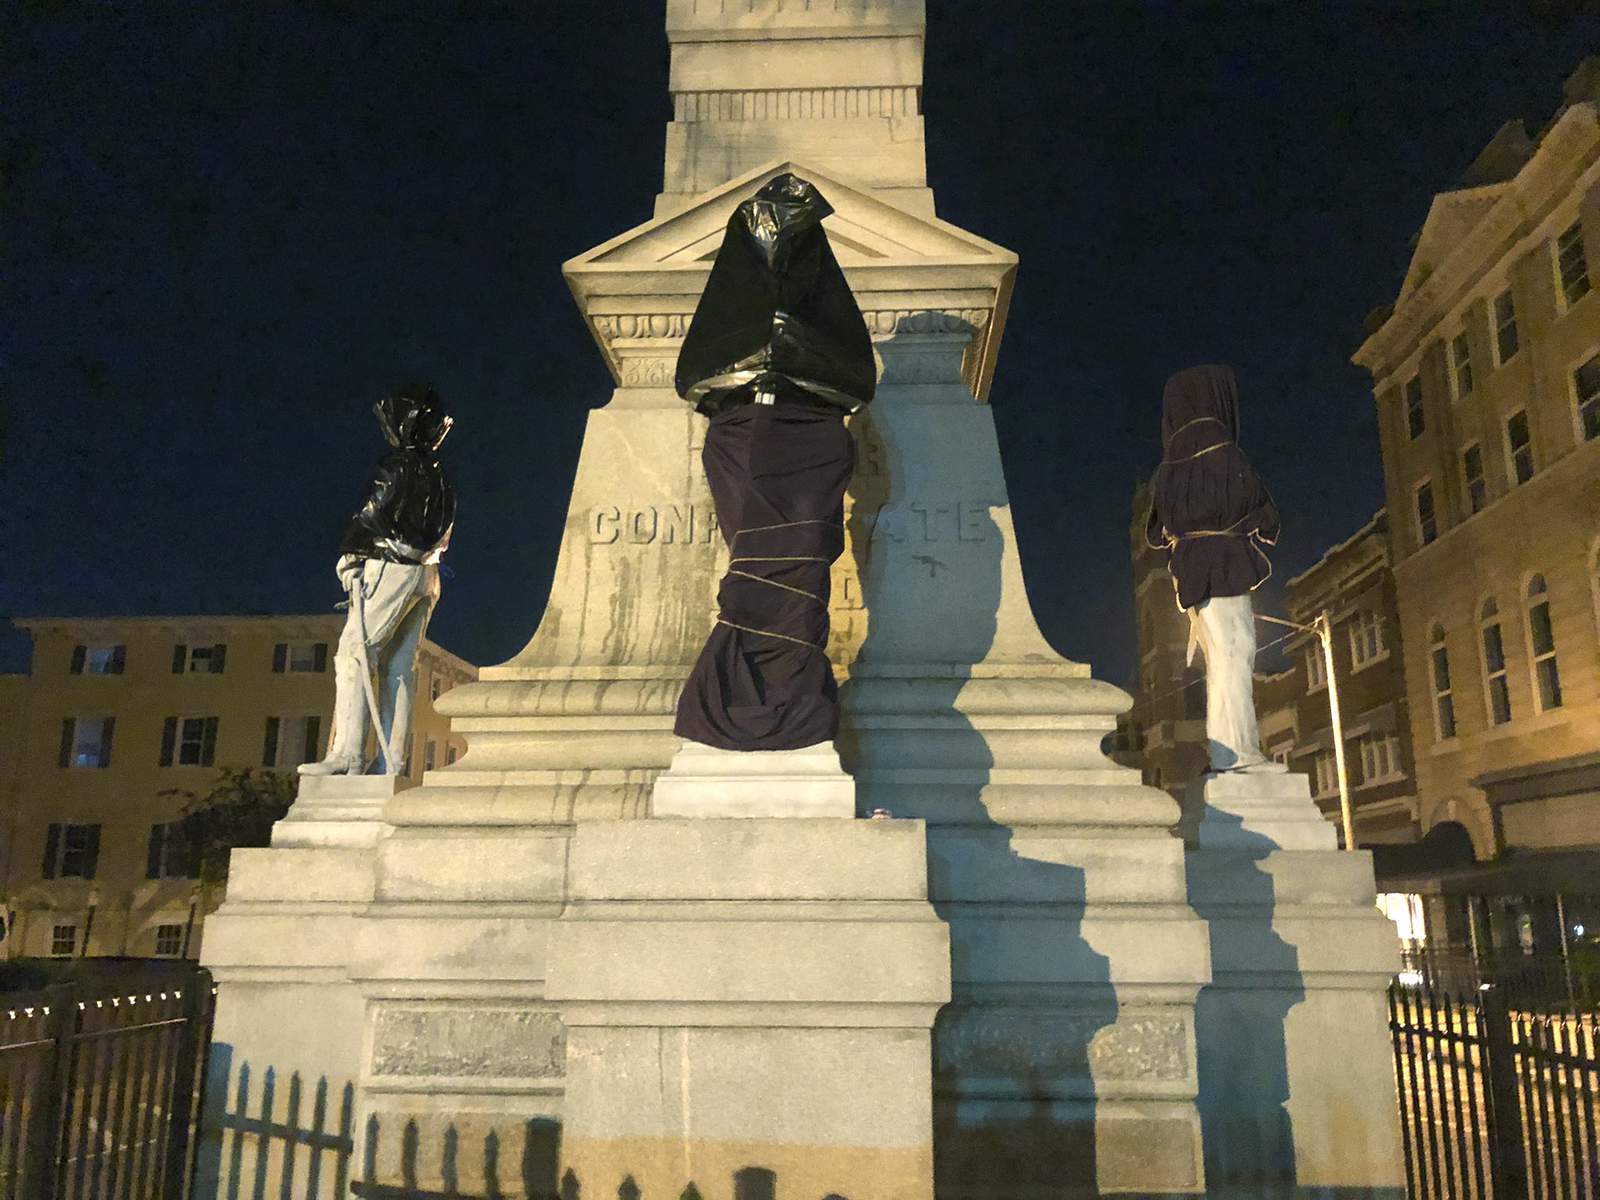 The Latest: Virginia city aims to move Confederate statue